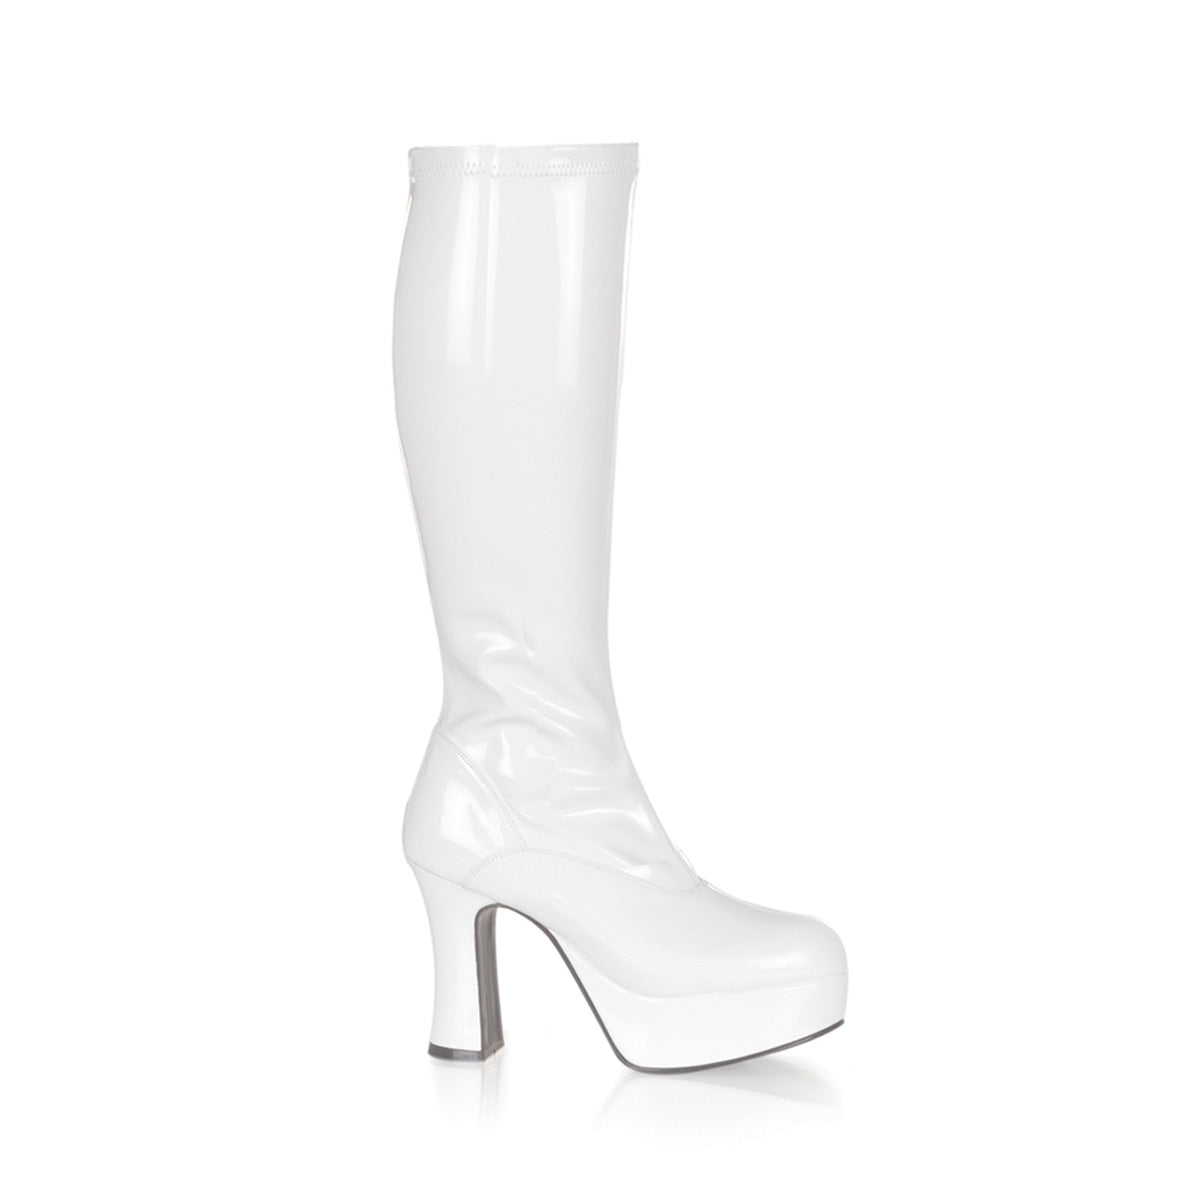 EXOTICA-2000 Pleasers Funtasma 4 Inch Heel White Patent Women's Boots